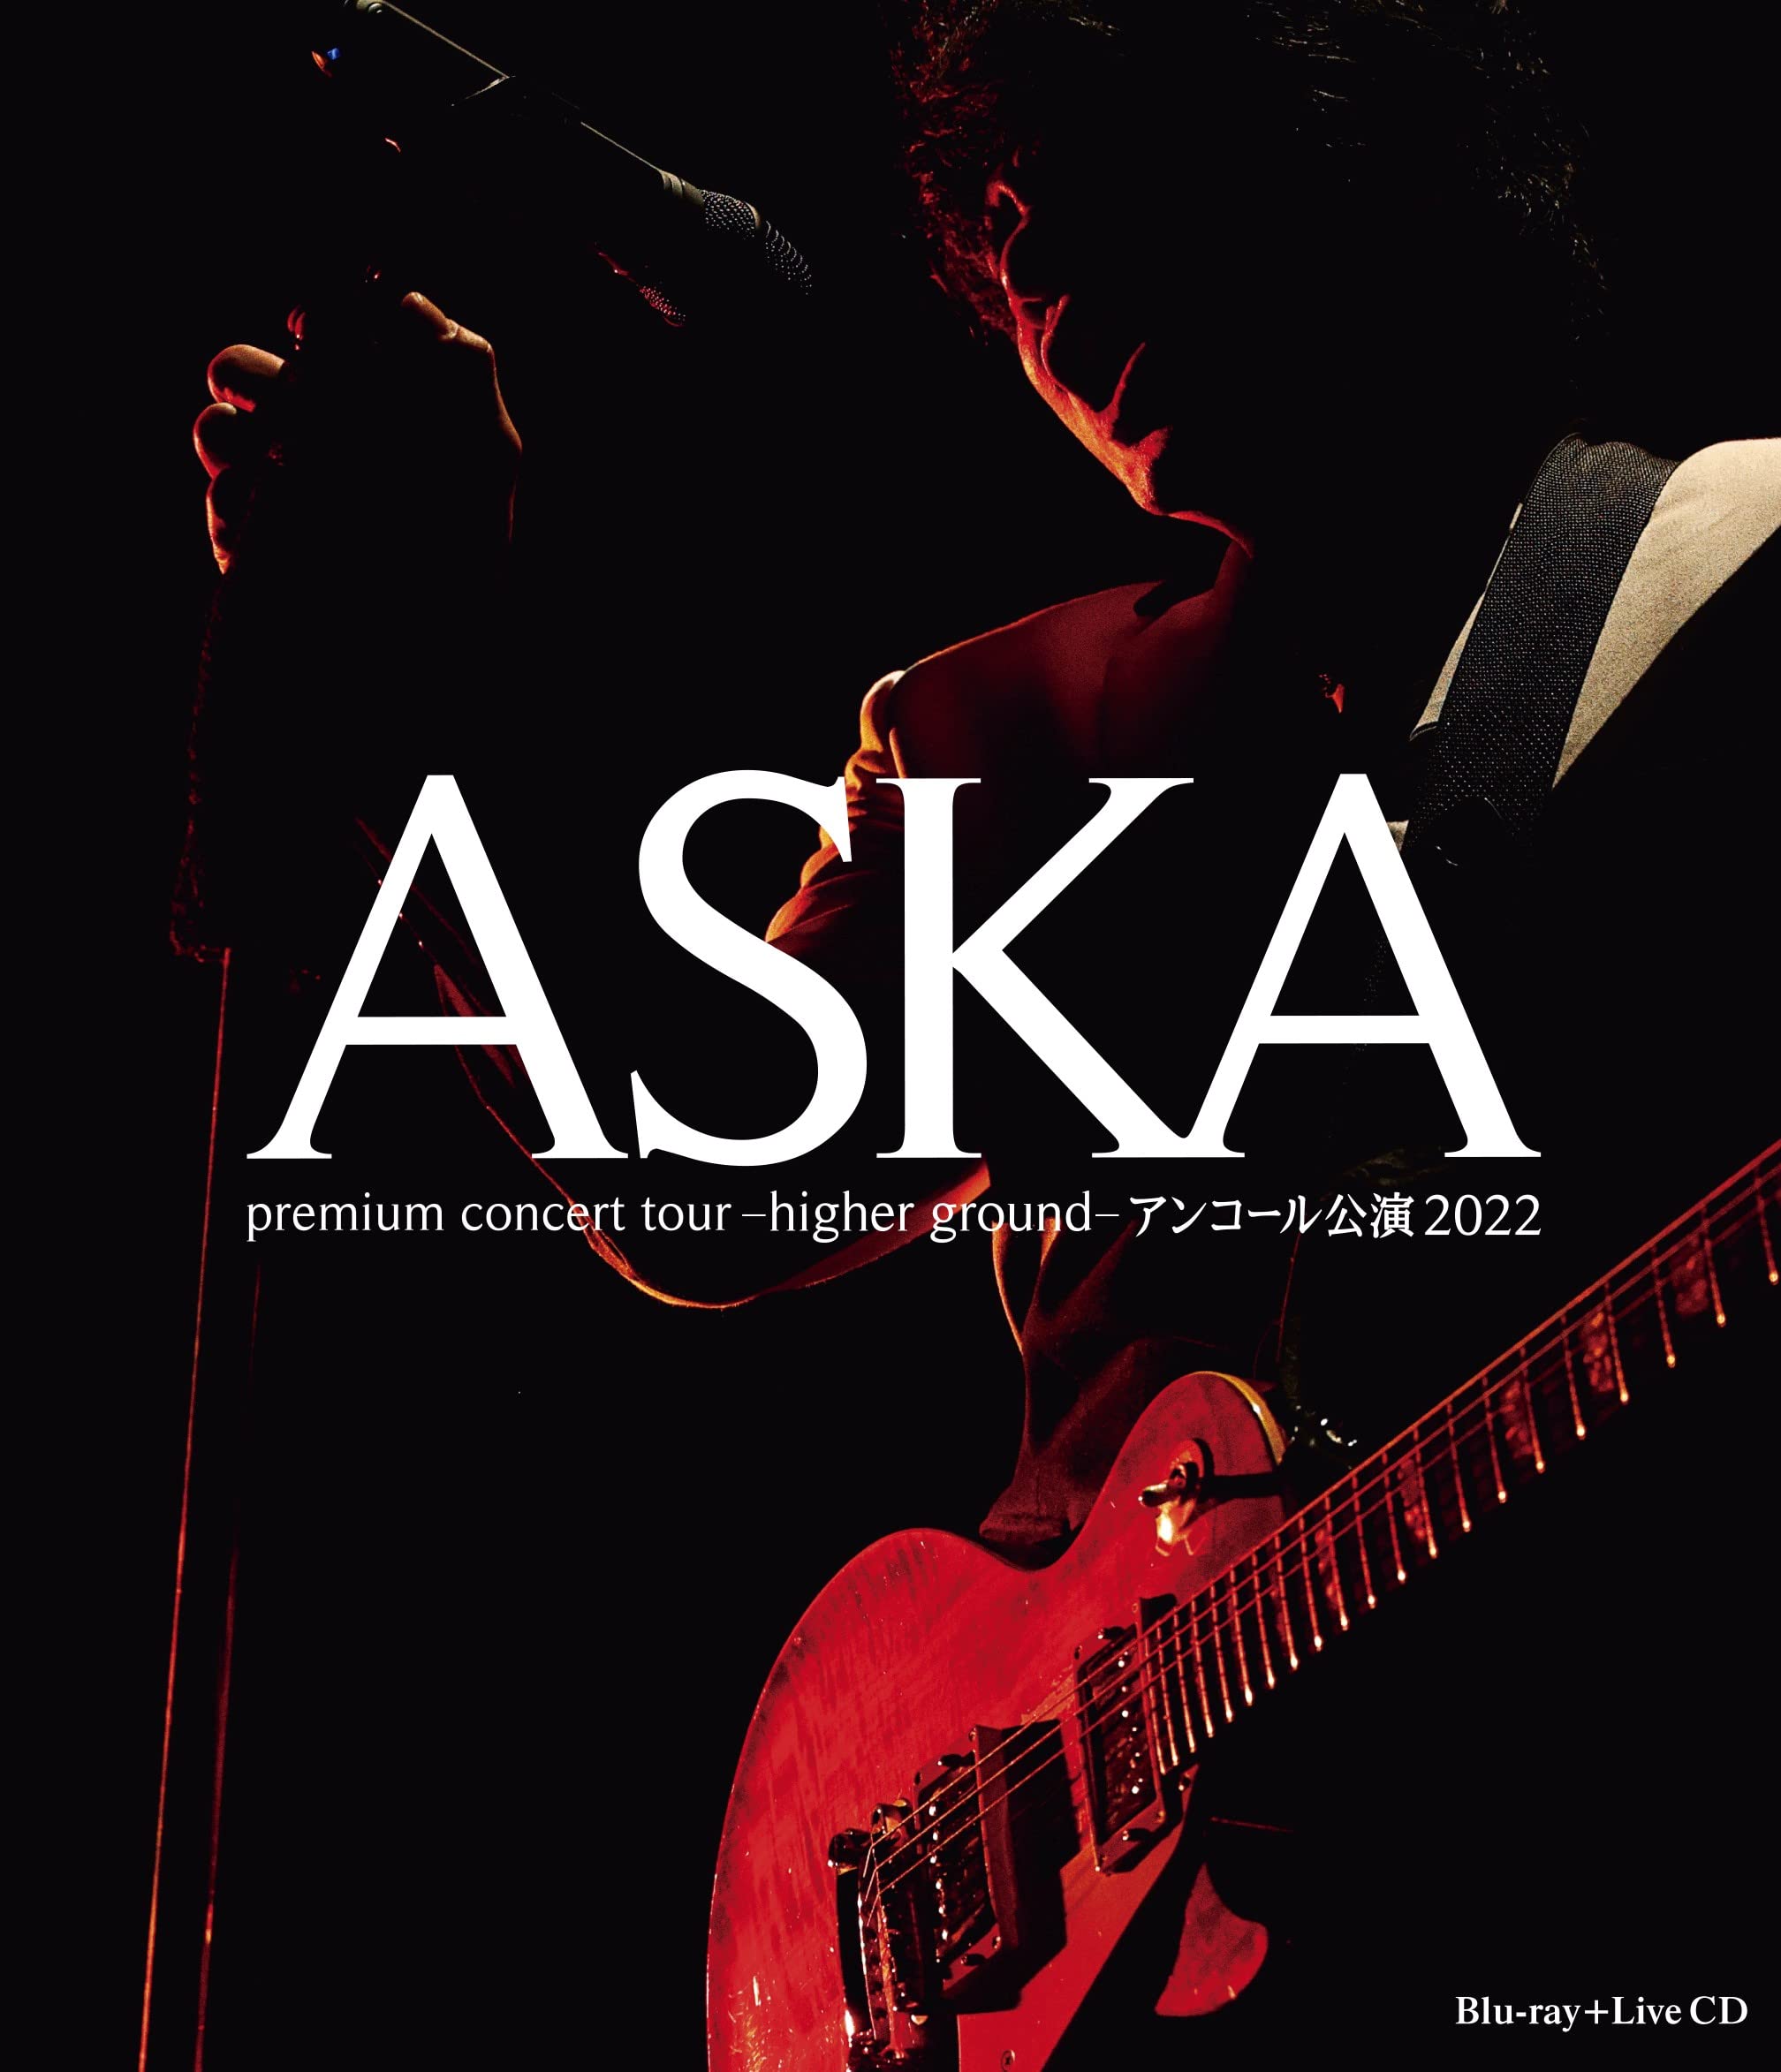 ASKA premium concert tour -higher ground-アンコール公演2022 Blu-ray Disc 2CD